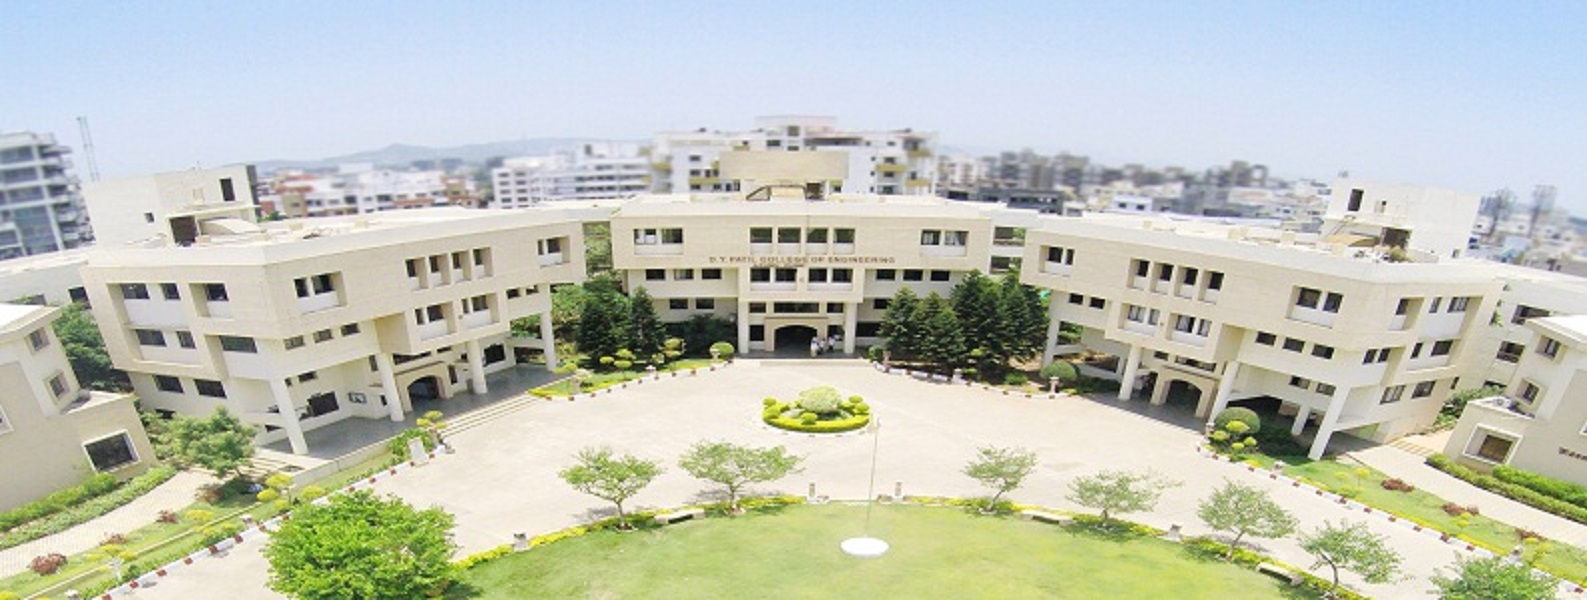 Direct Admission in D. Y. Patil College Pune through Management Quota